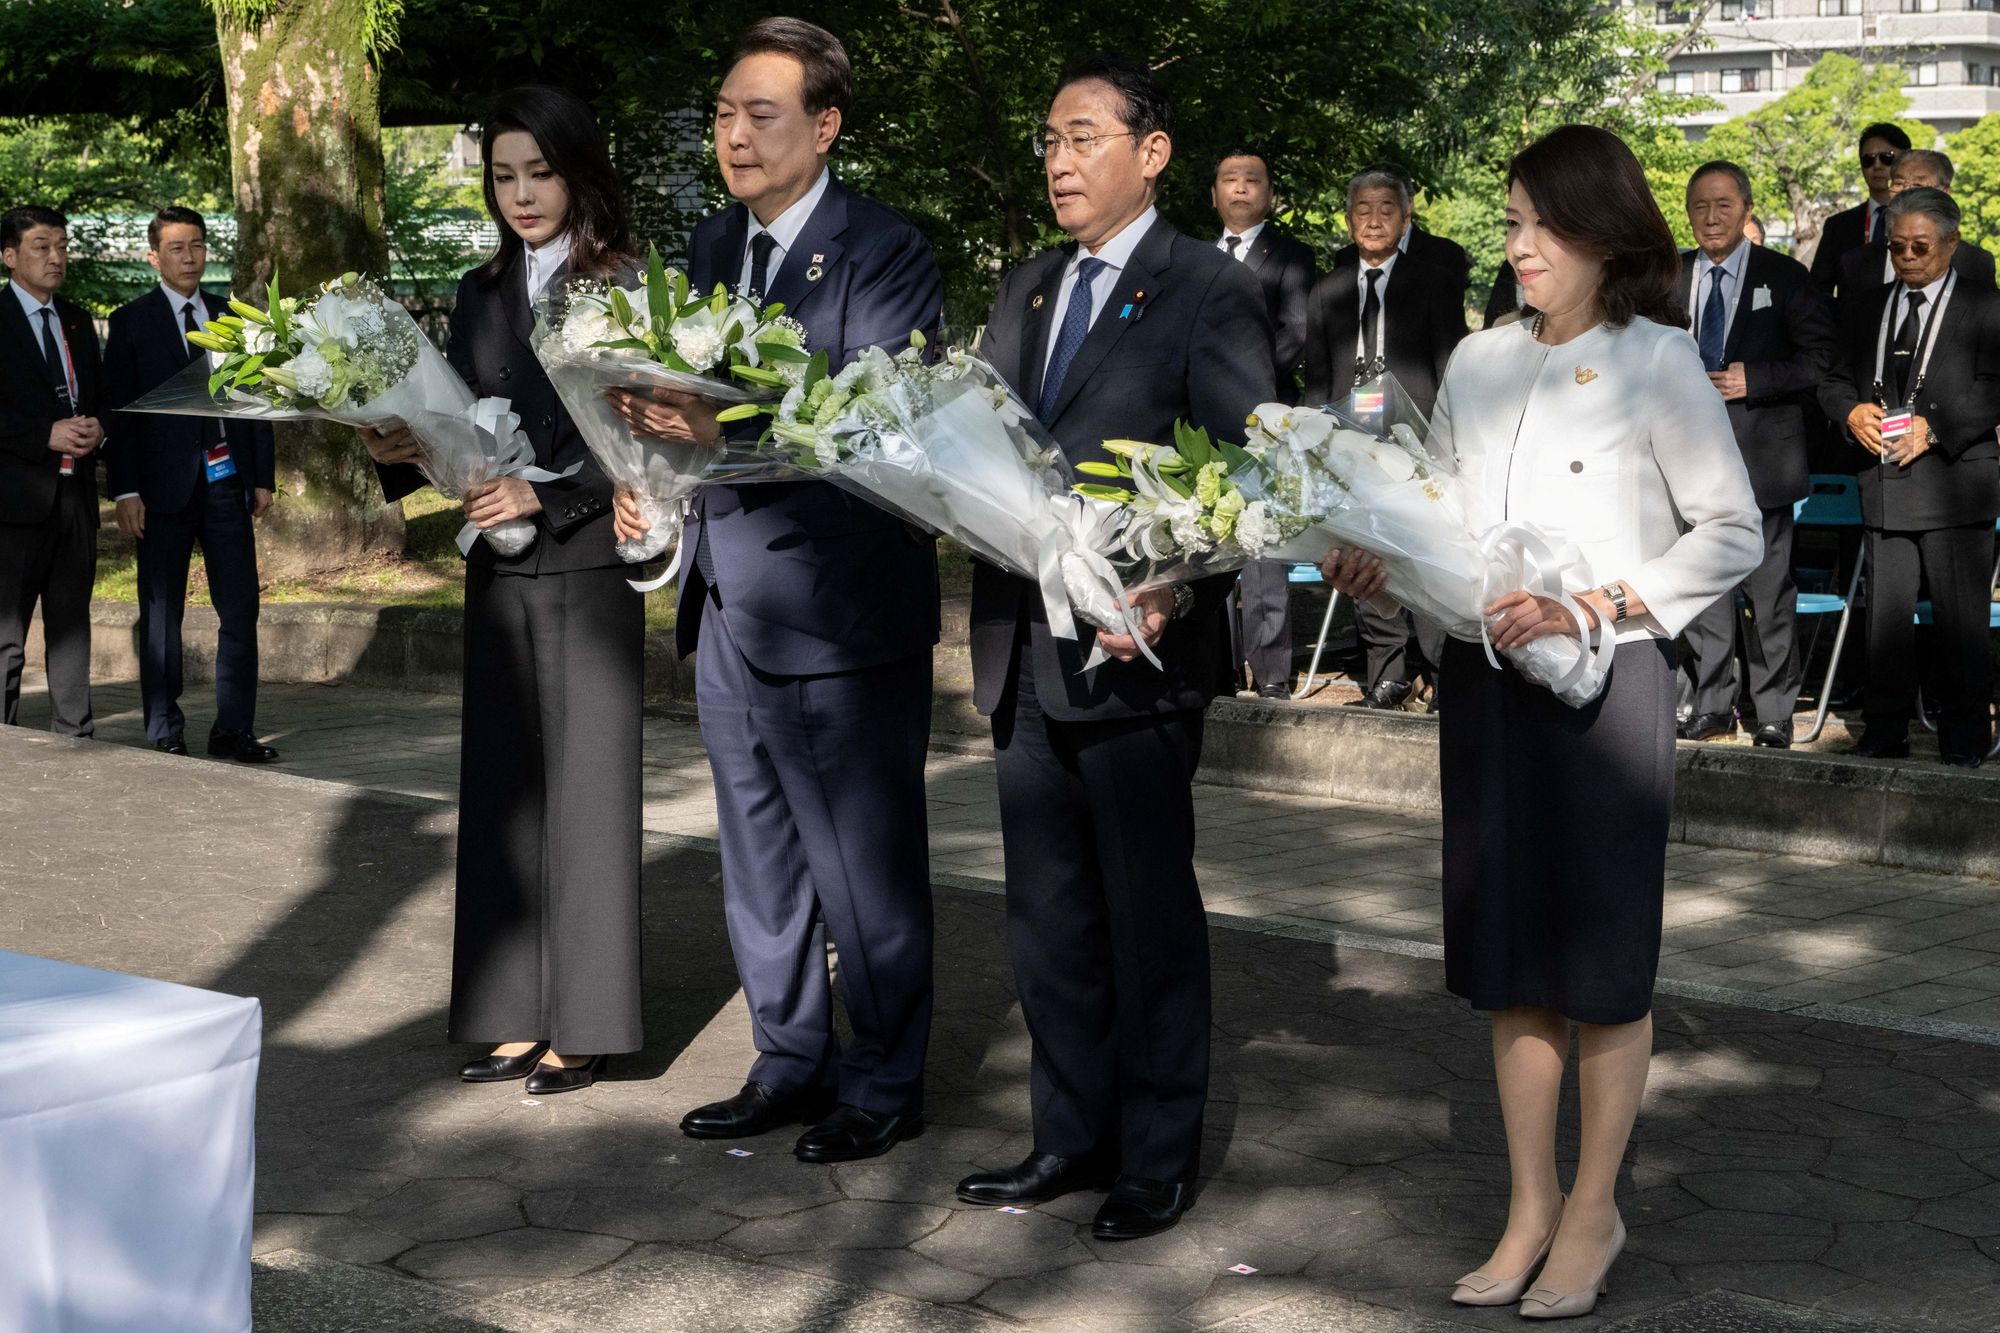 Hiroshima memorial in Japan at the G7 summit